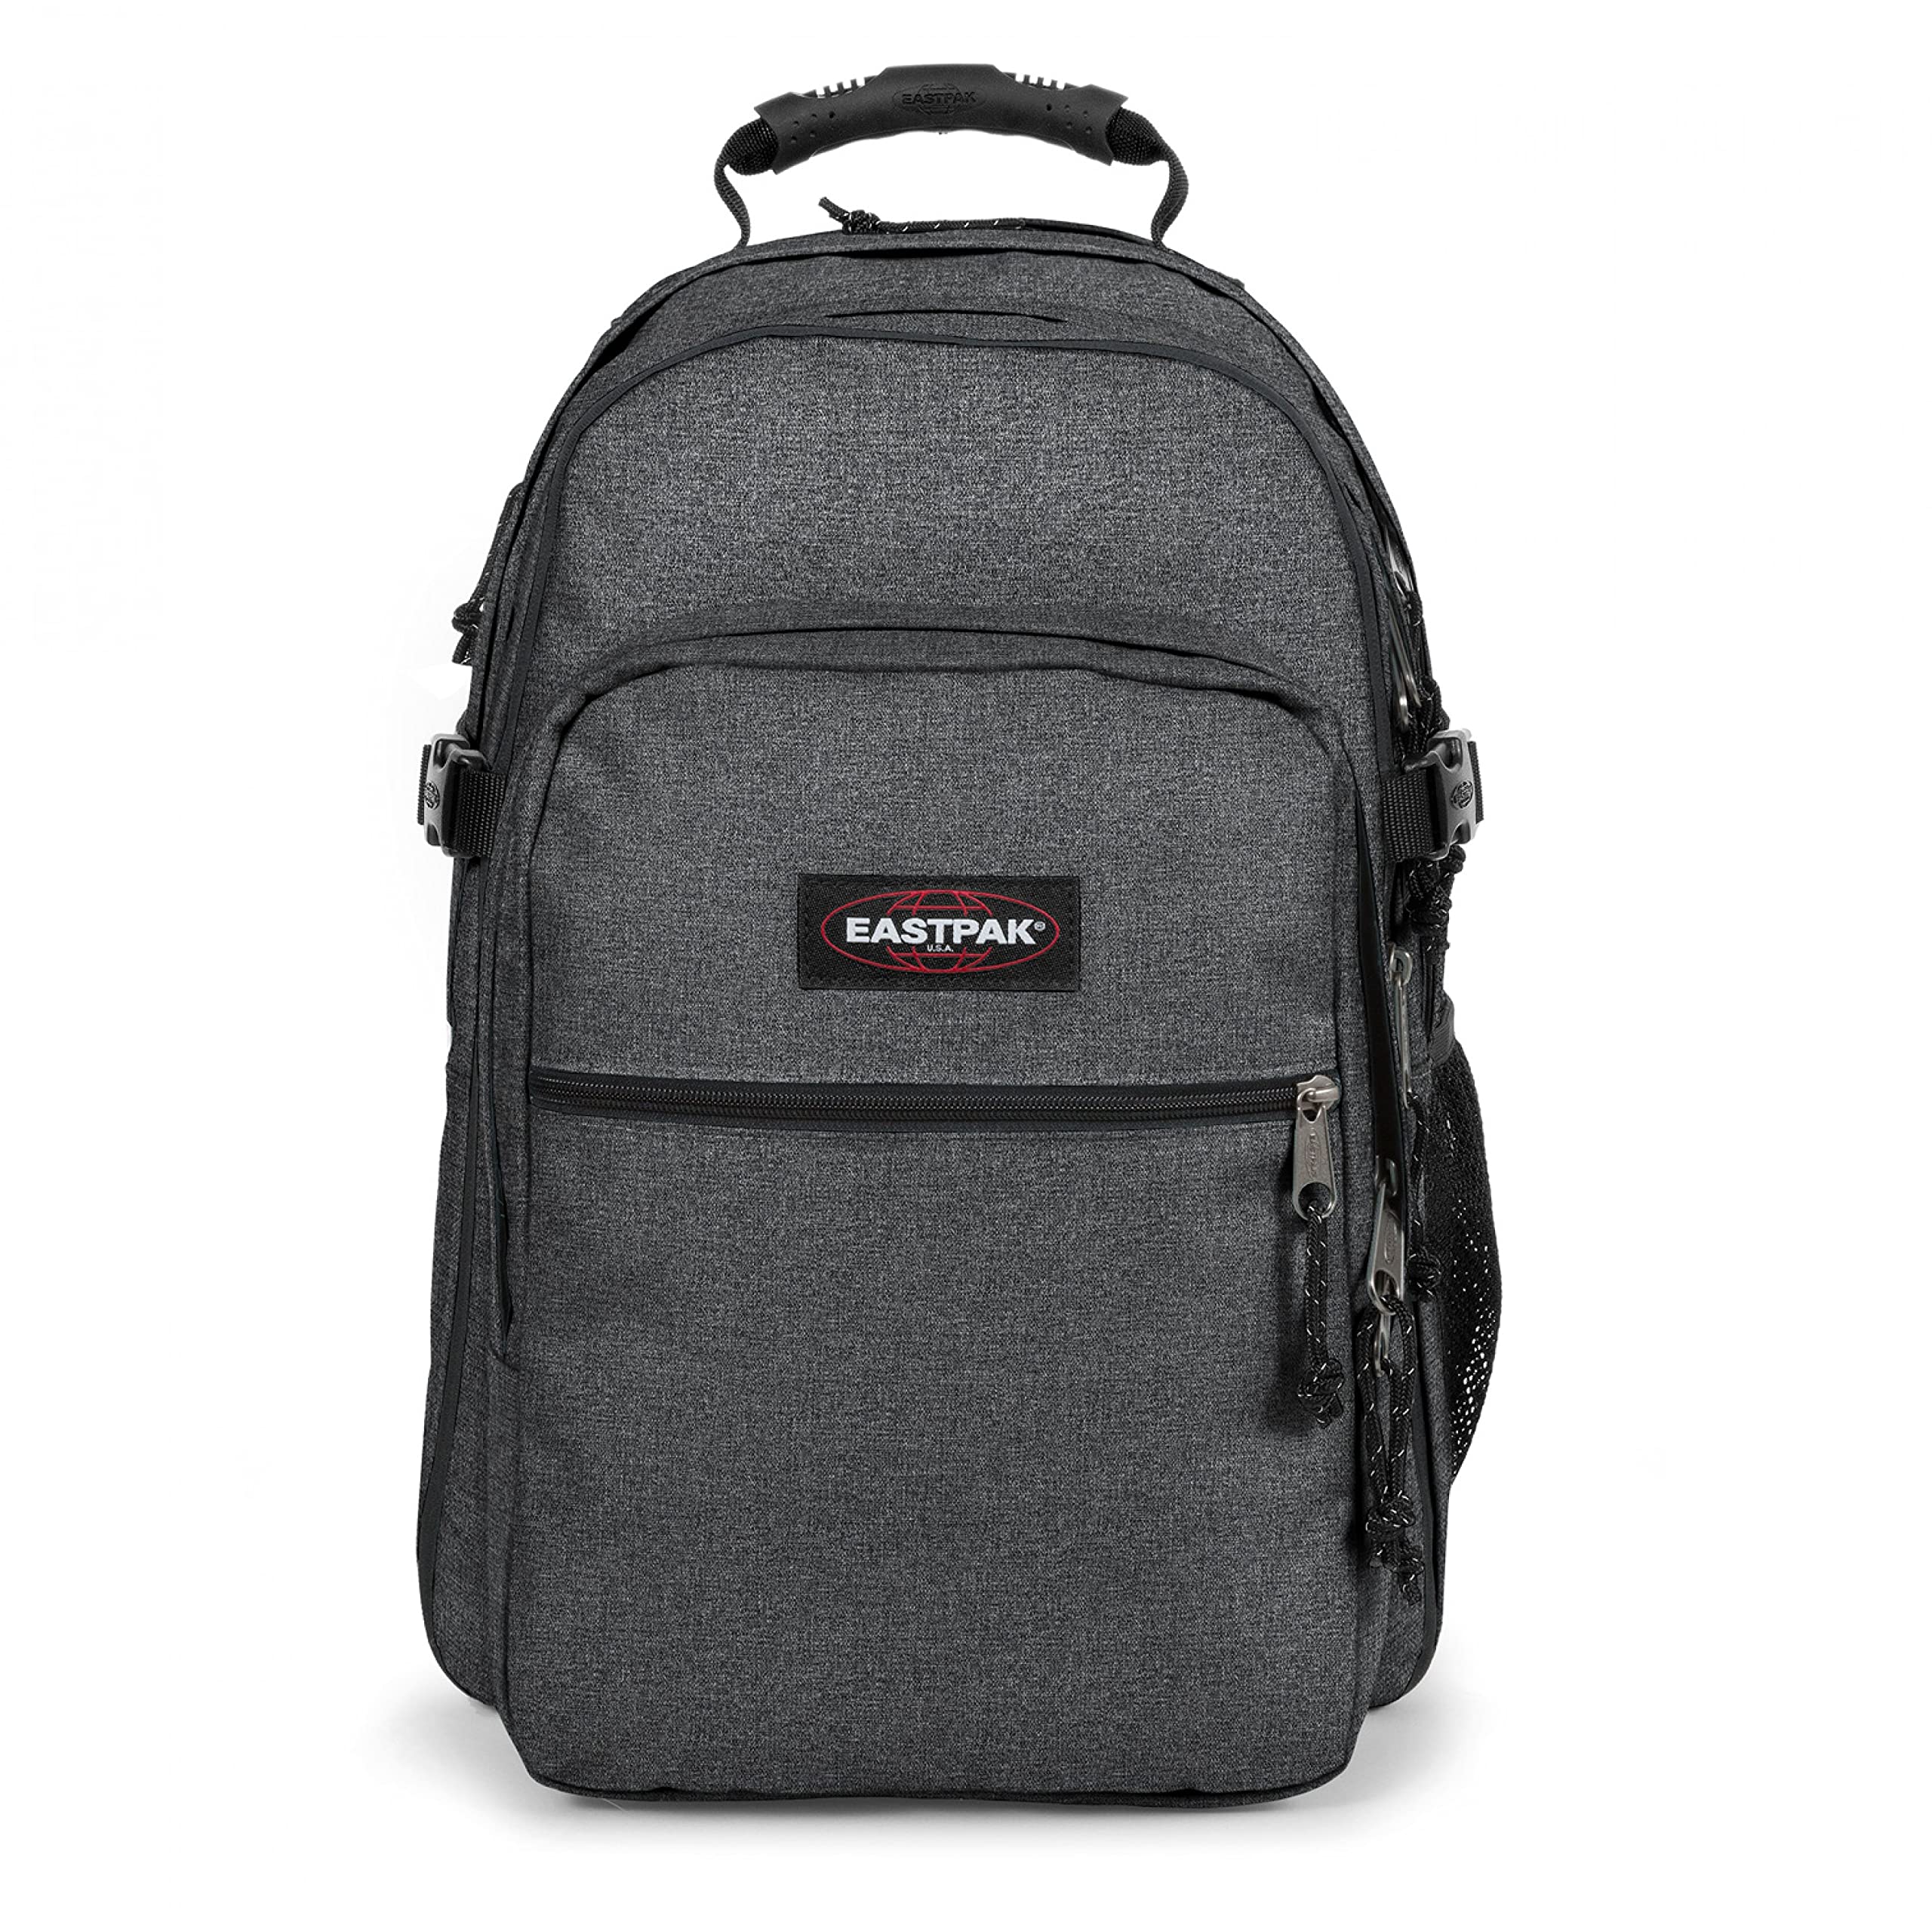 Eastpak Tutor Backpack - Bag for School, Laptop, Travel, Work, or Bookbag - Dark Grey